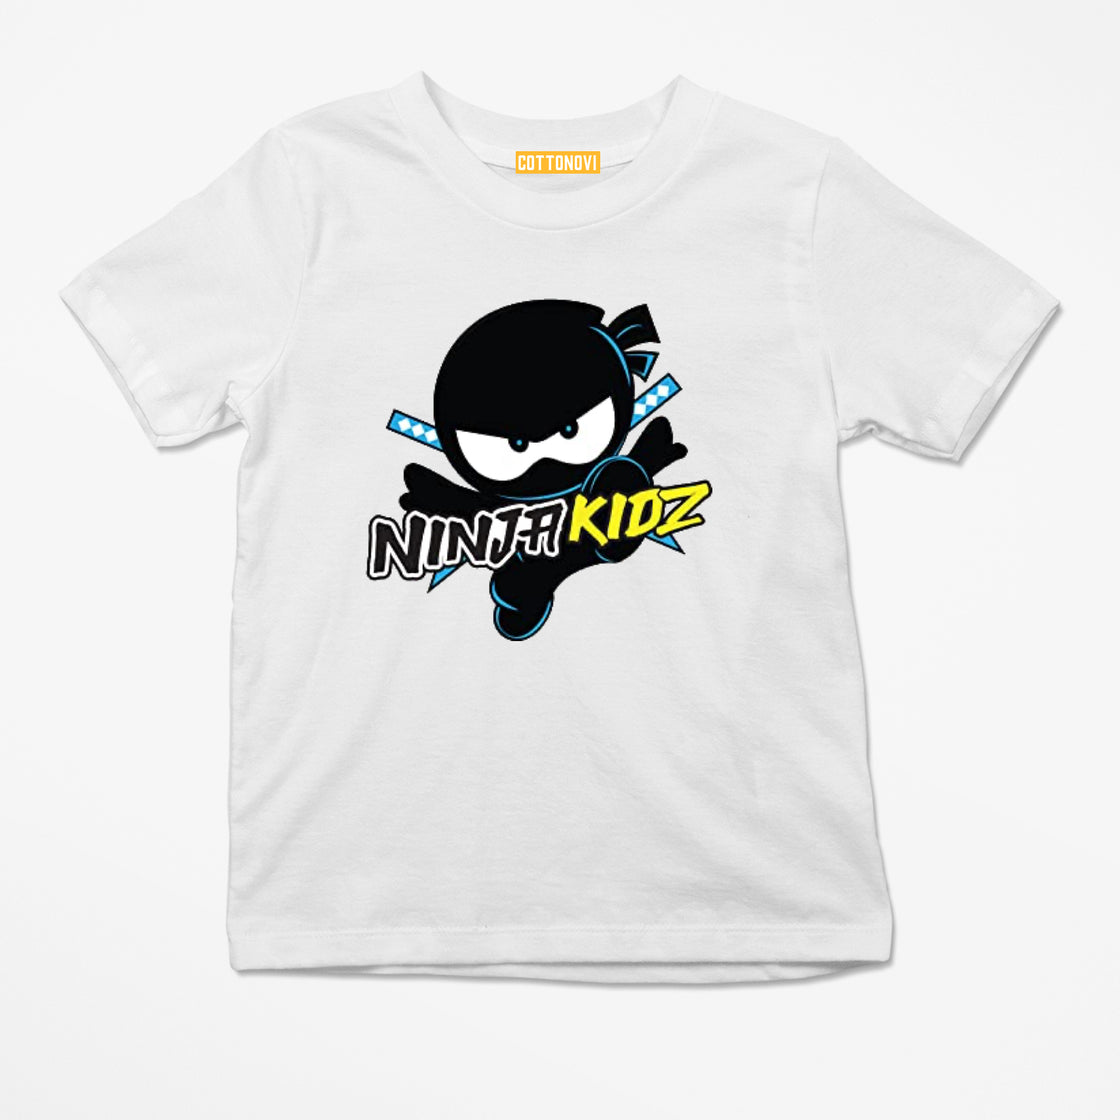 Ninja kidz T-shirt